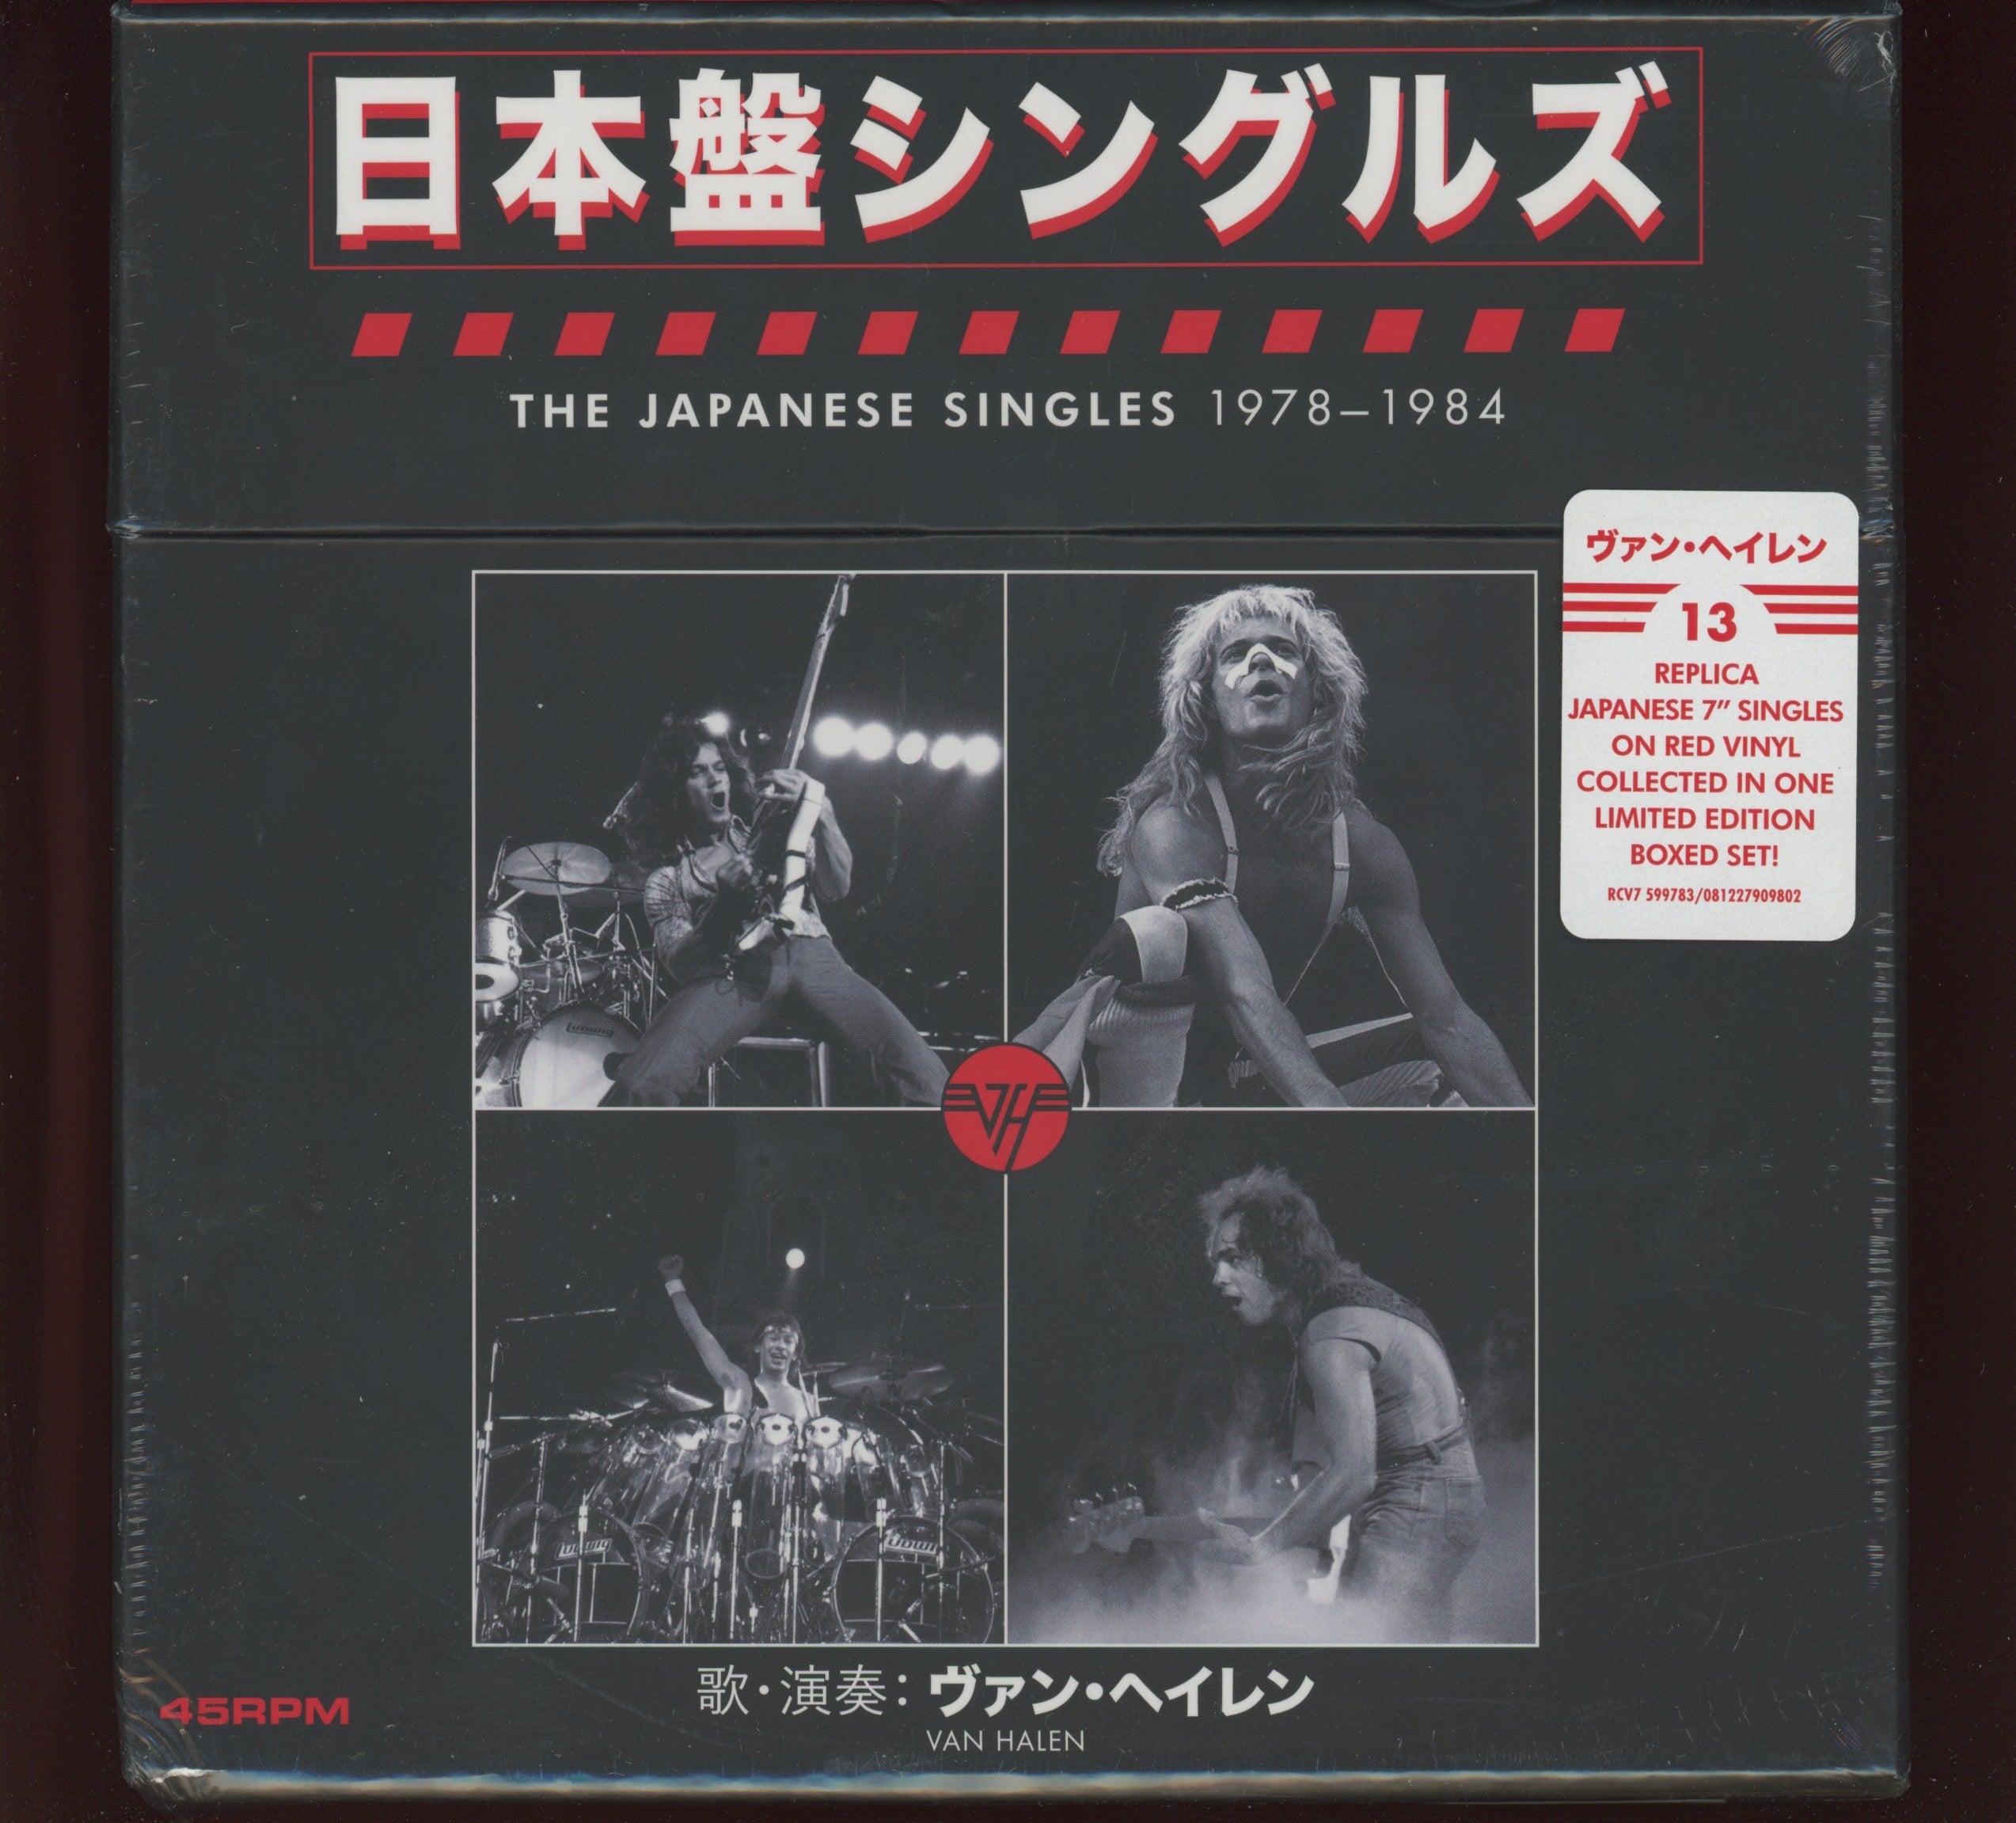 Van Halen - The Japanese Singles: 1978-1984 on Rhino Ltd Edition Red Vinyl 45 RPM Box Set Sealed